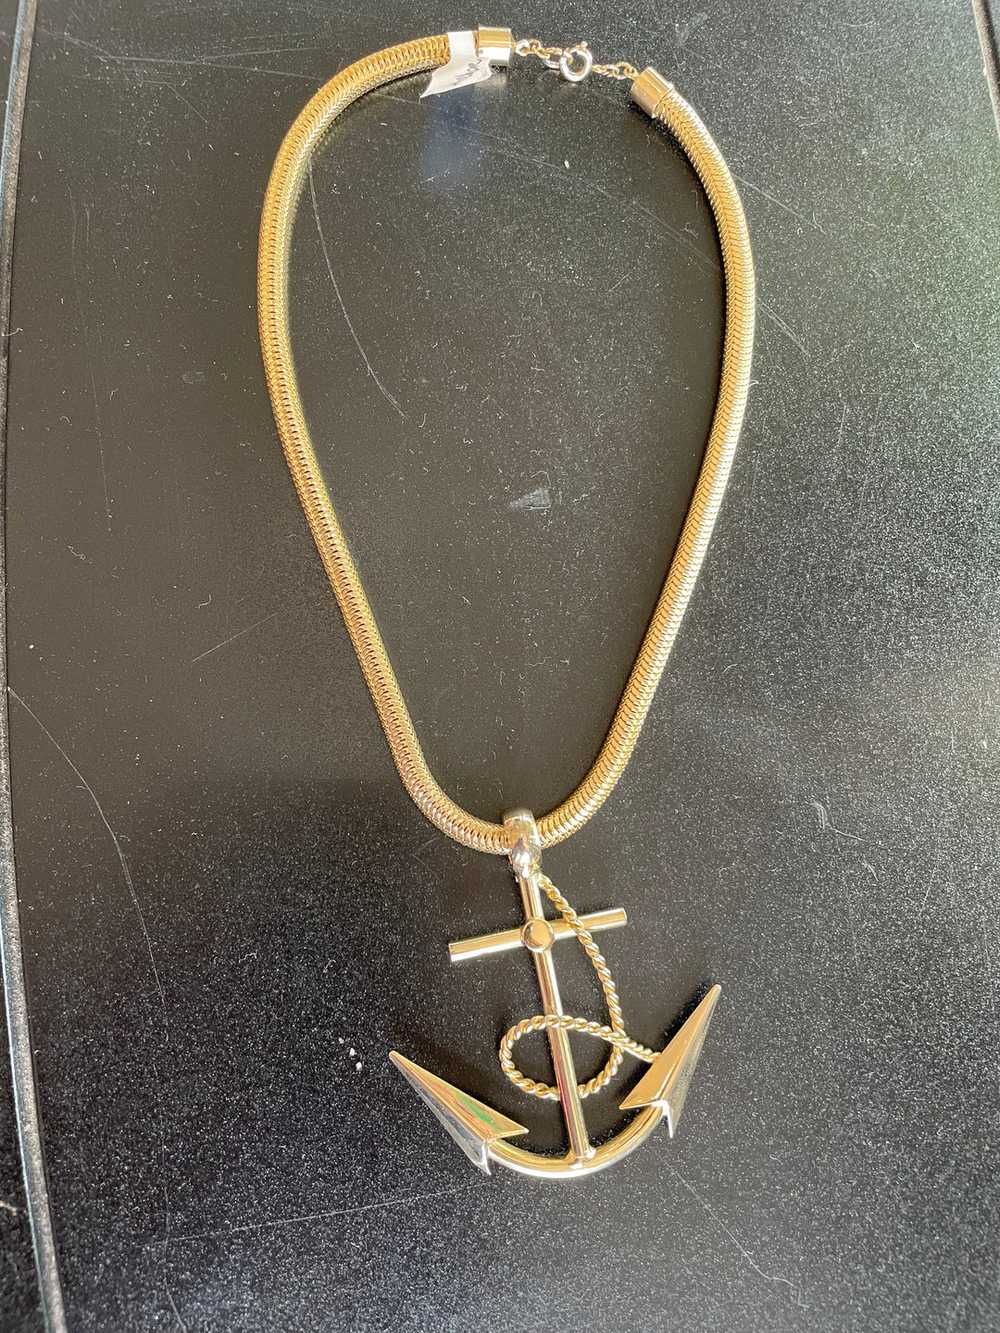 Vintage Anchor Necklace - image 2